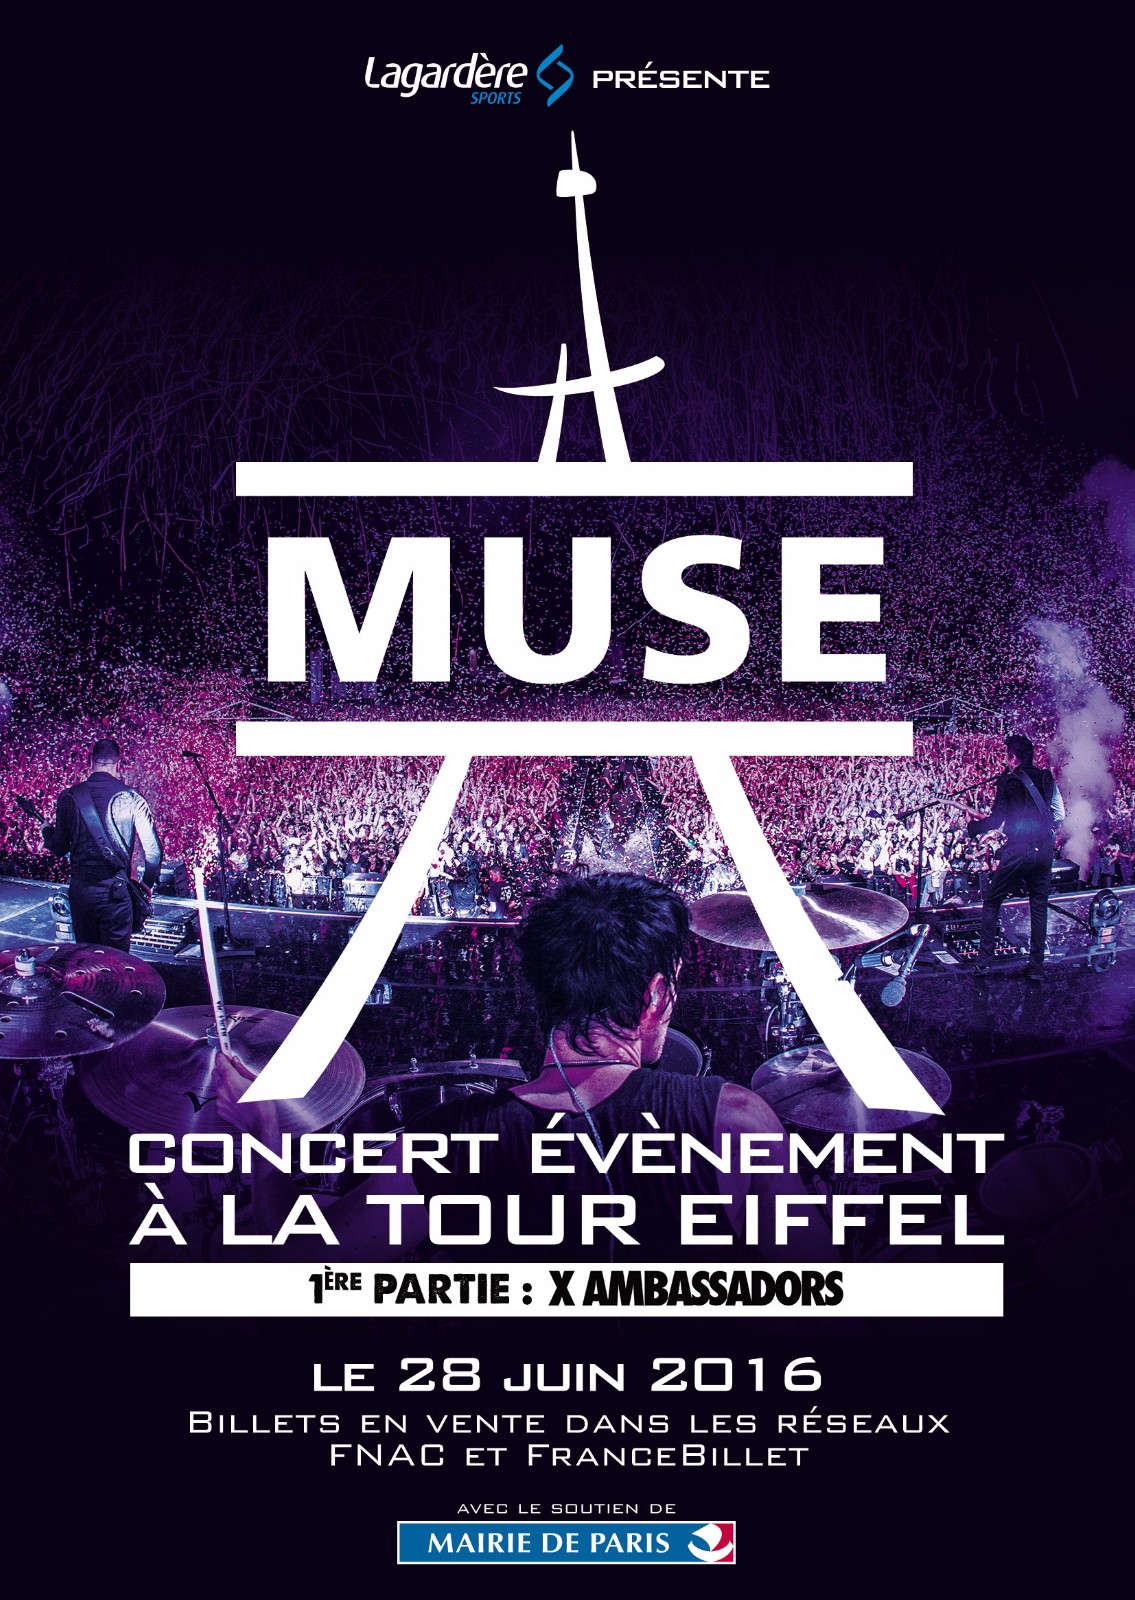 Muse要在铁塔下面开音乐会了！